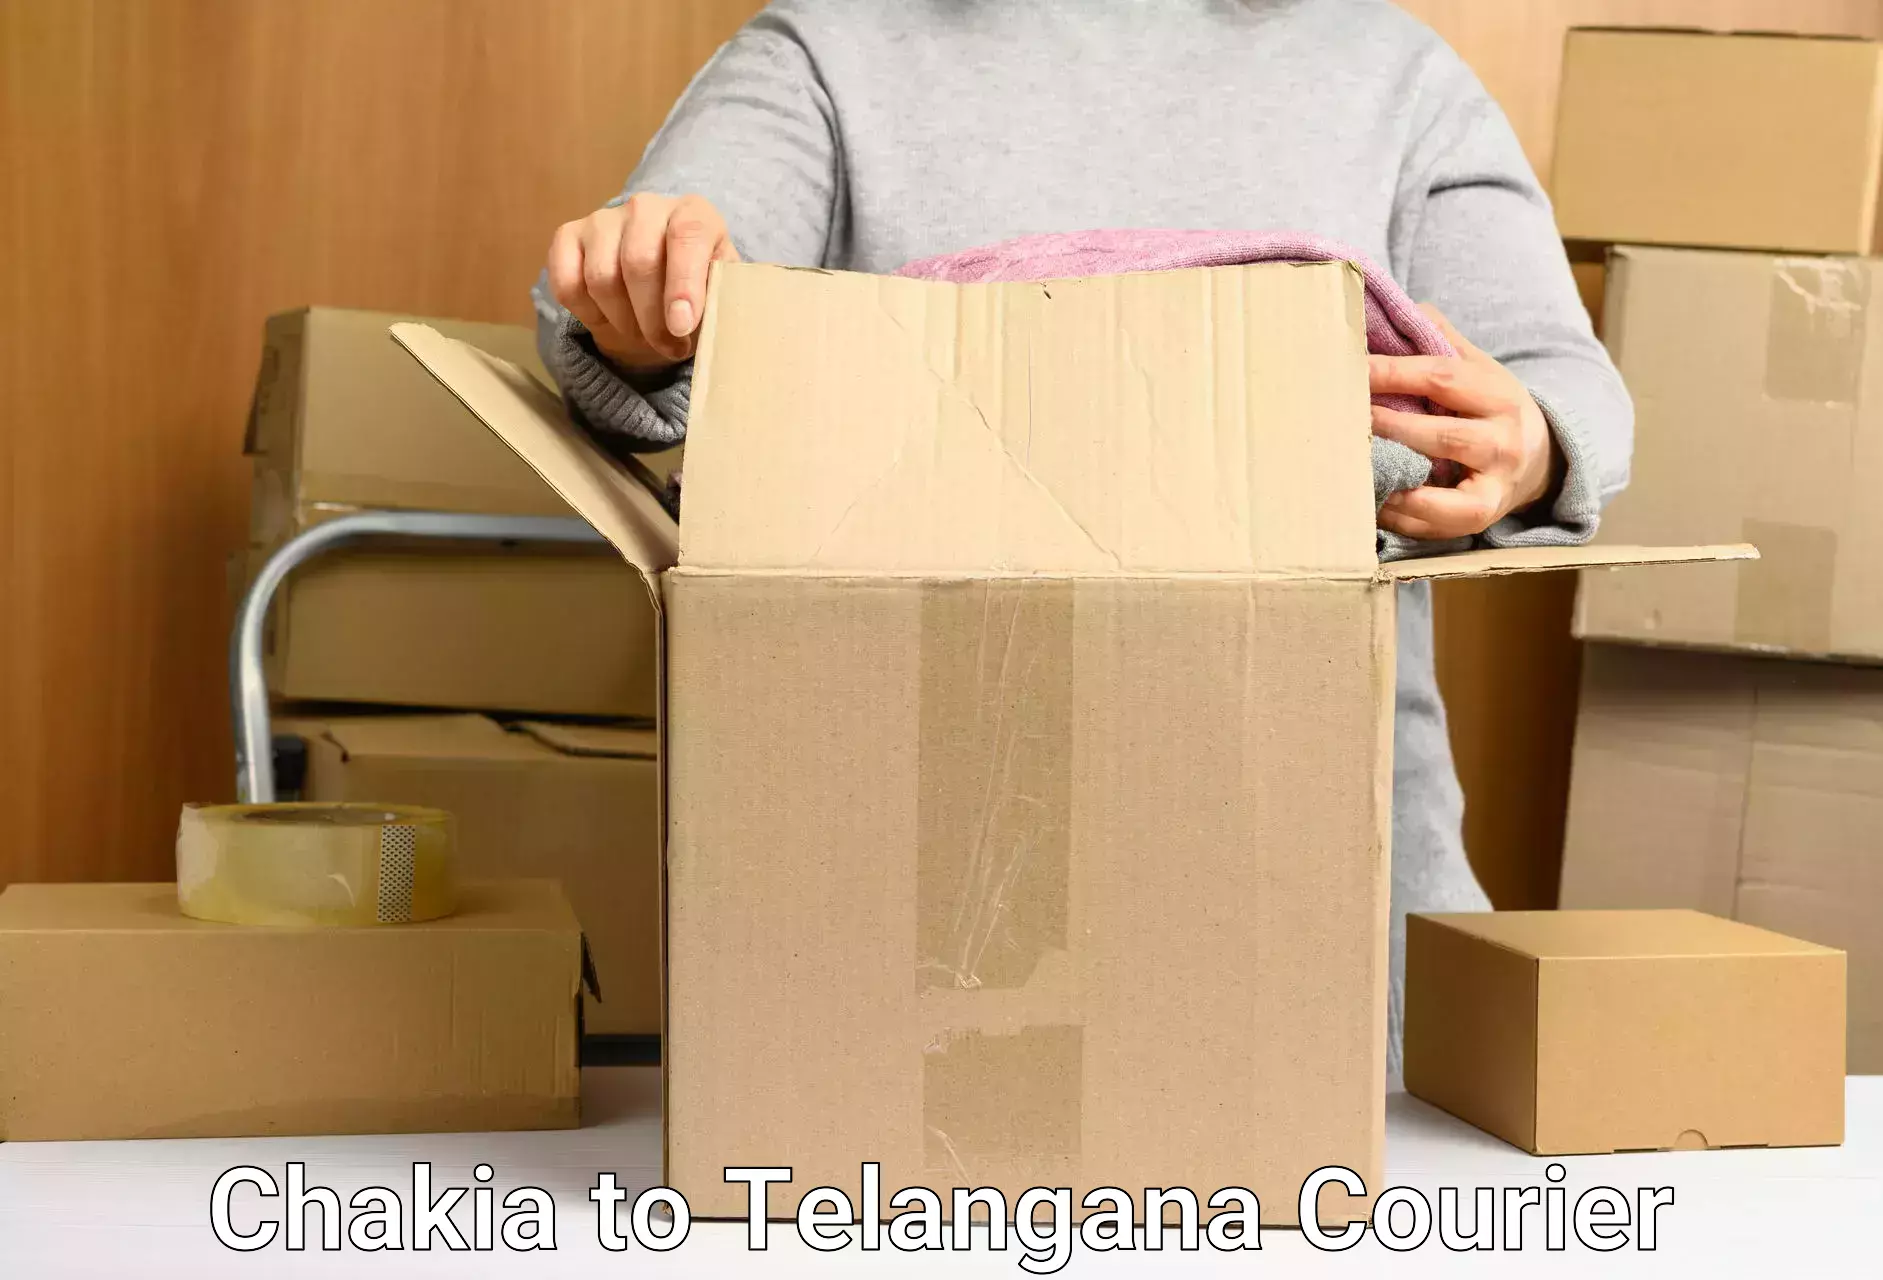 Reliable logistics providers Chakia to Telangana